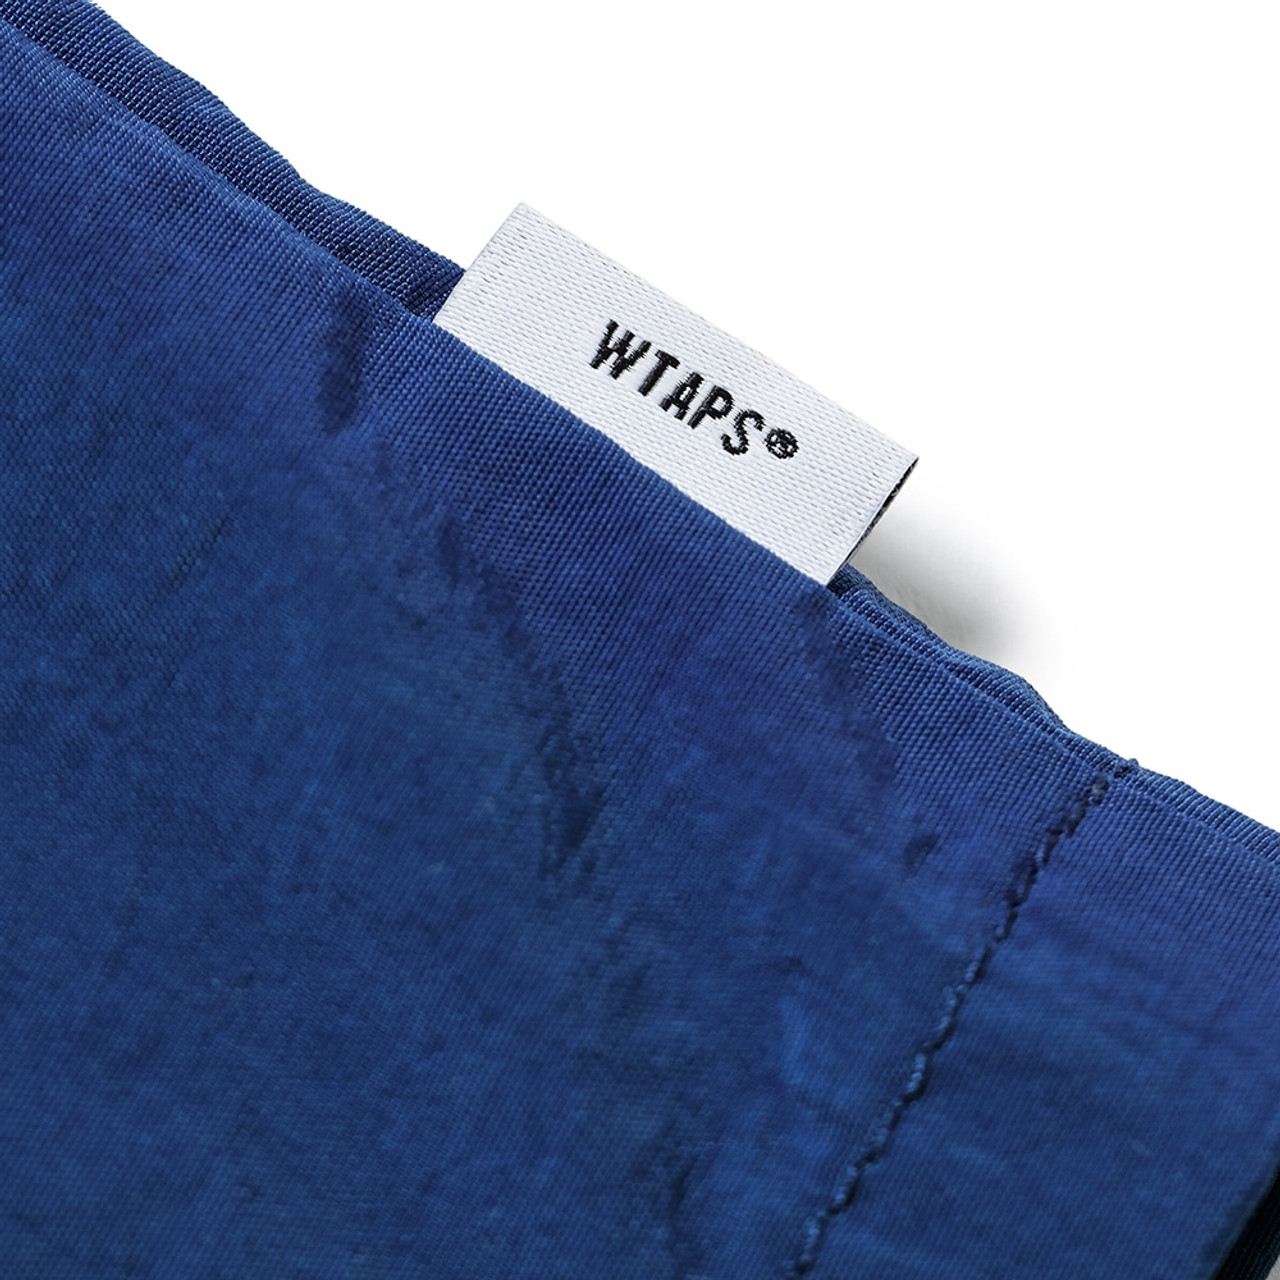 WTAPS Trousers SEAGULL 02 / SHORTS / NYLON. TUSSAH